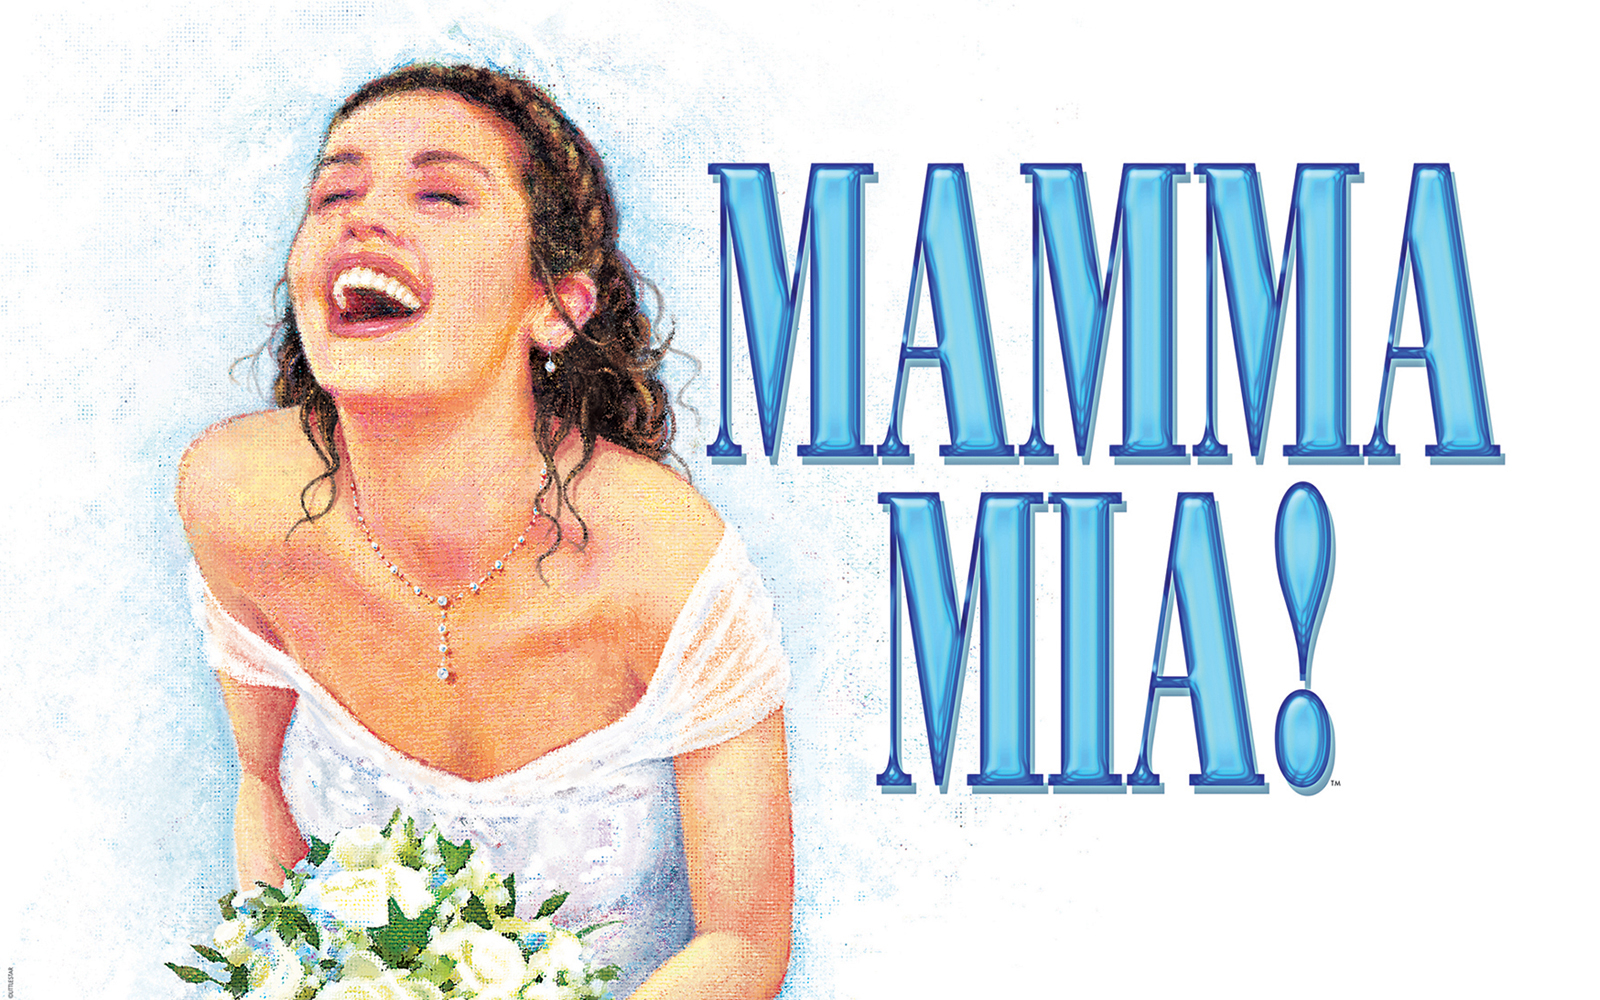 Mamma Mia! Tickets - Only £15.00 - Tickets.co.uk